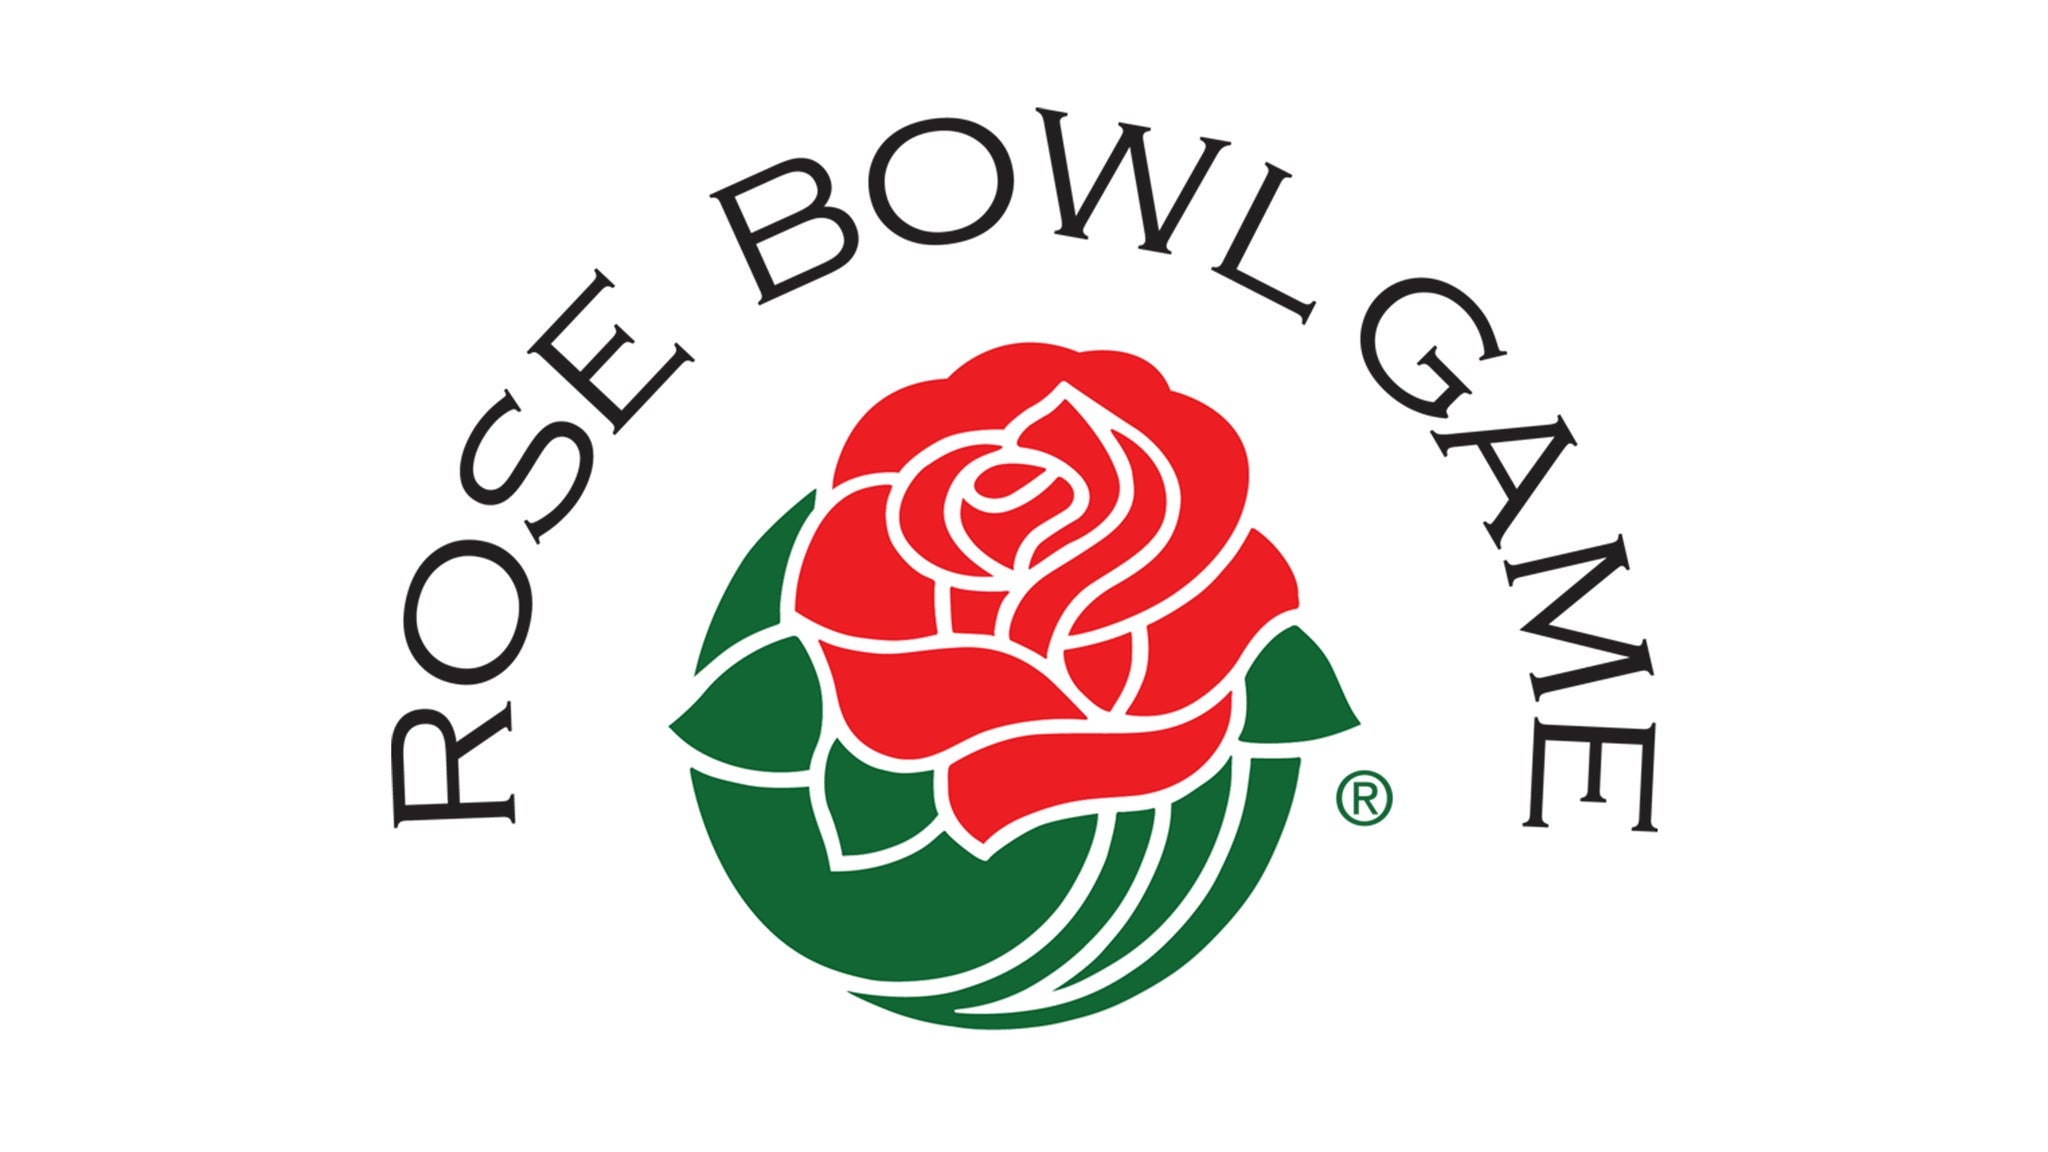 Rose Bowl Game: Pavilion Premium Seating in Pasadena promo photo for Resale Onsale presale offer code